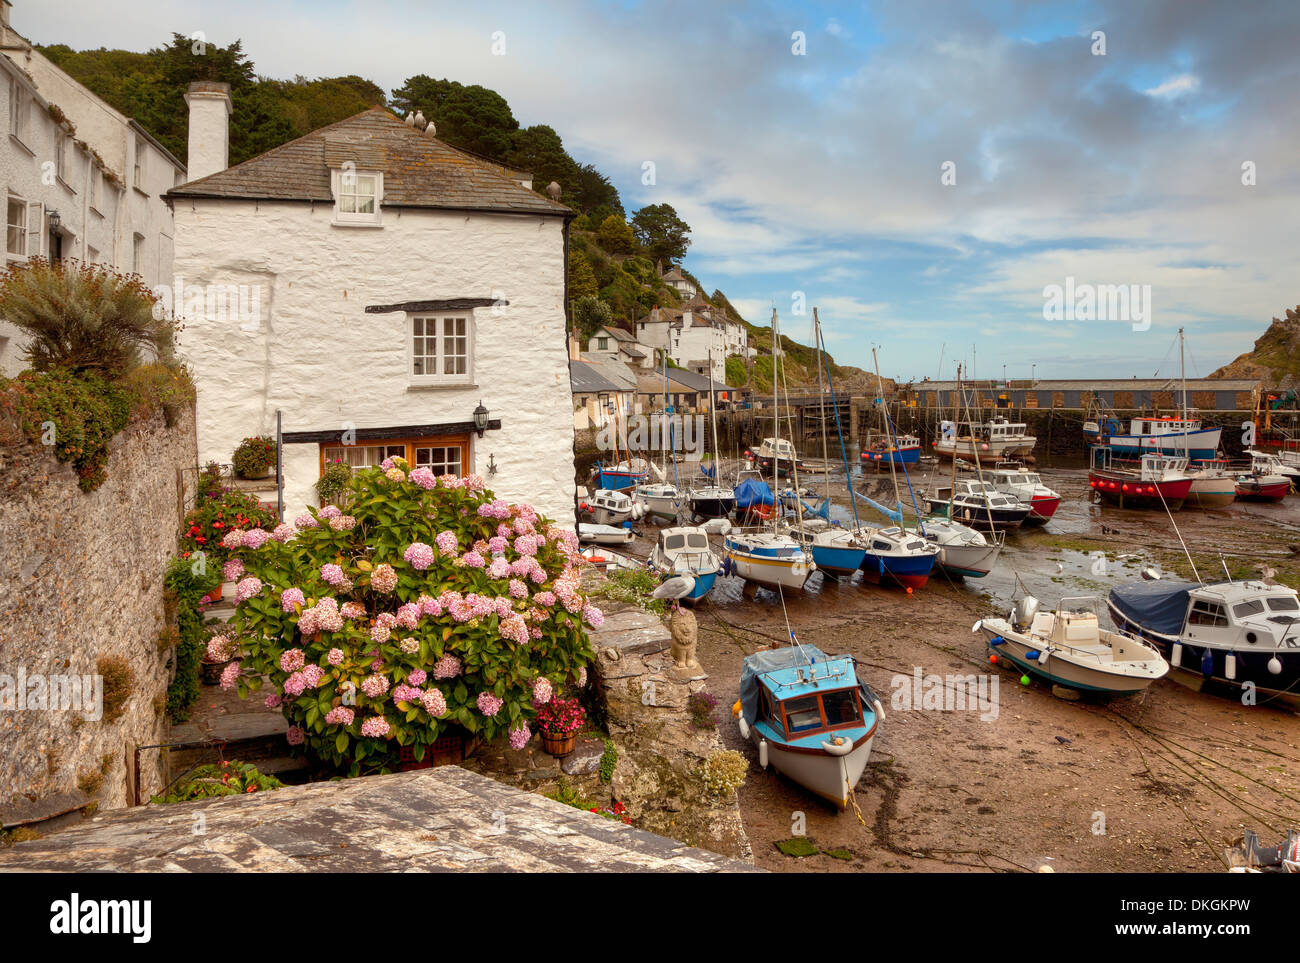 Das historische Dorf Polperro, Cornwall, England. Stockfoto